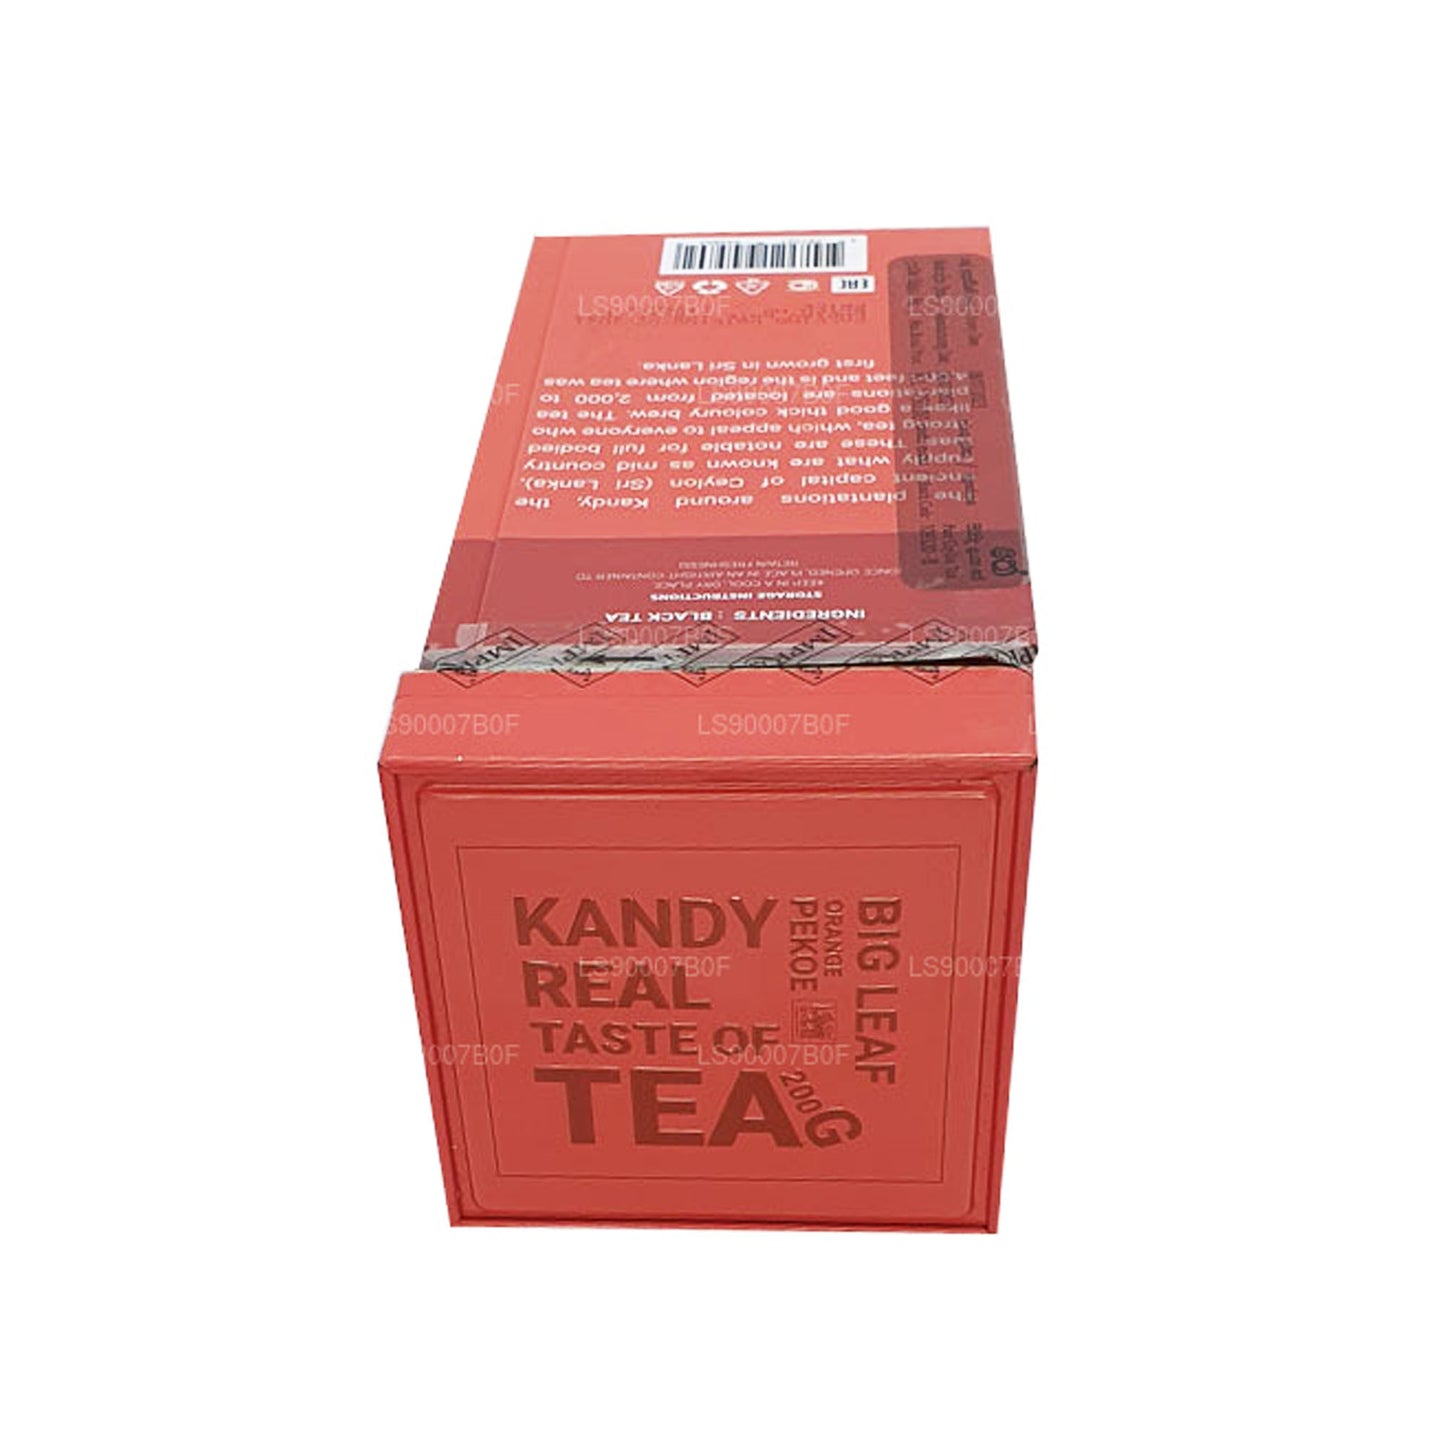 Impra Kandy Taste of Tea Big Leaf Orange Pekoe (200g) Meatal Caddy